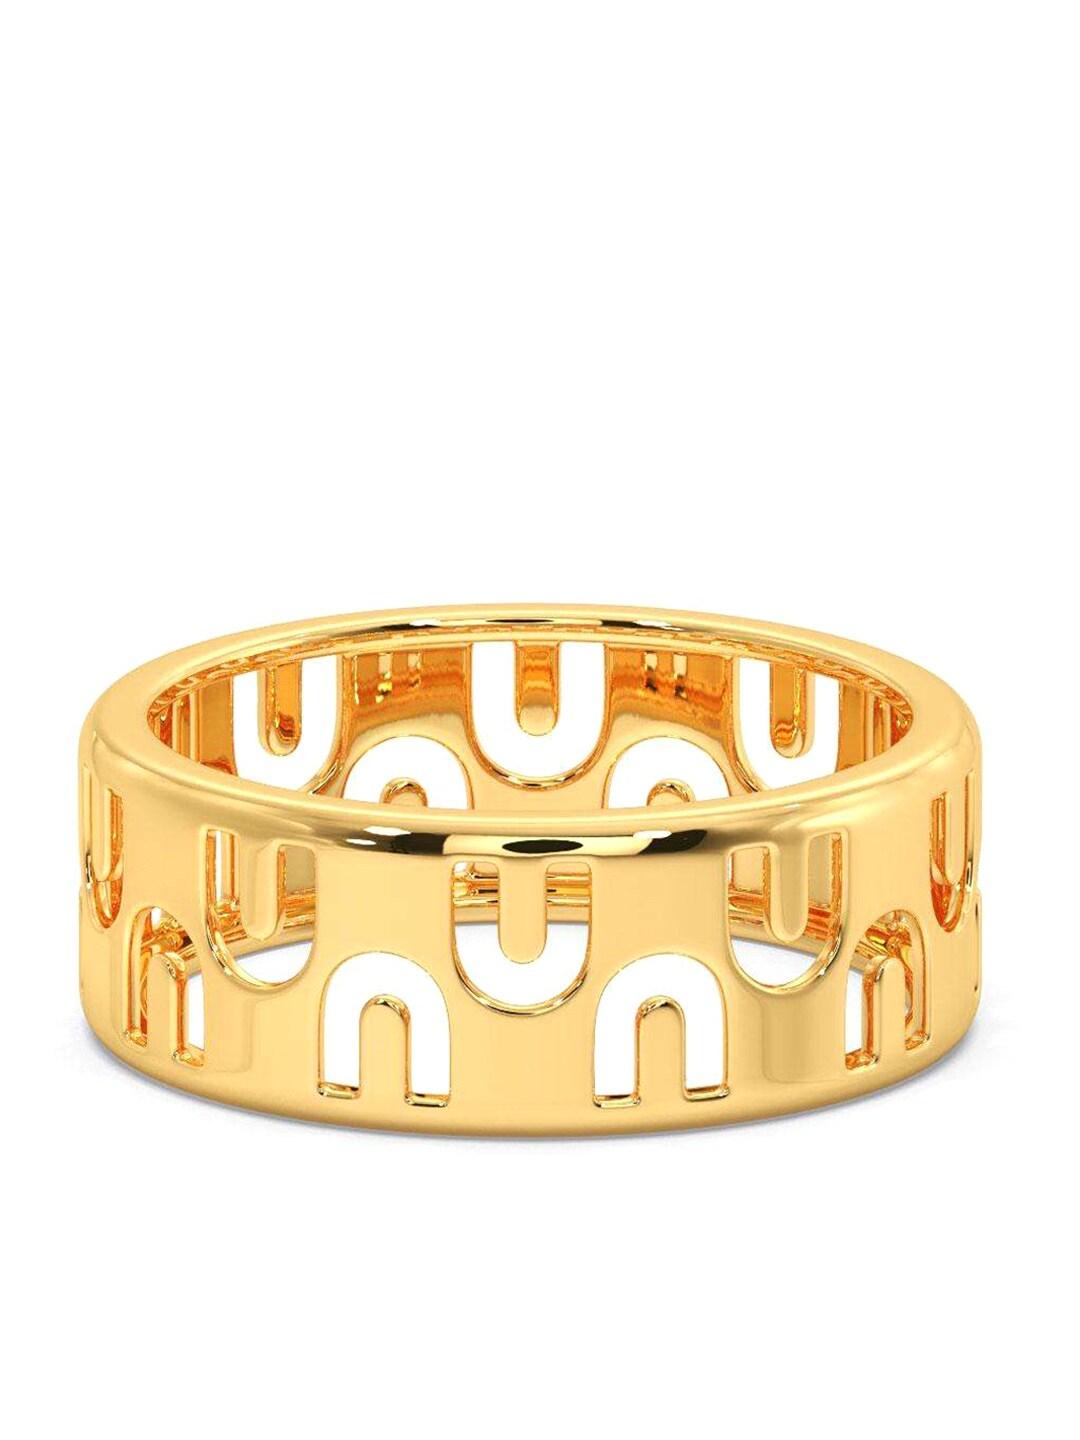 candere-a-kalyan-jewellers-company-men-18kt-bis-hallmark-gold-ring---3.72-gm